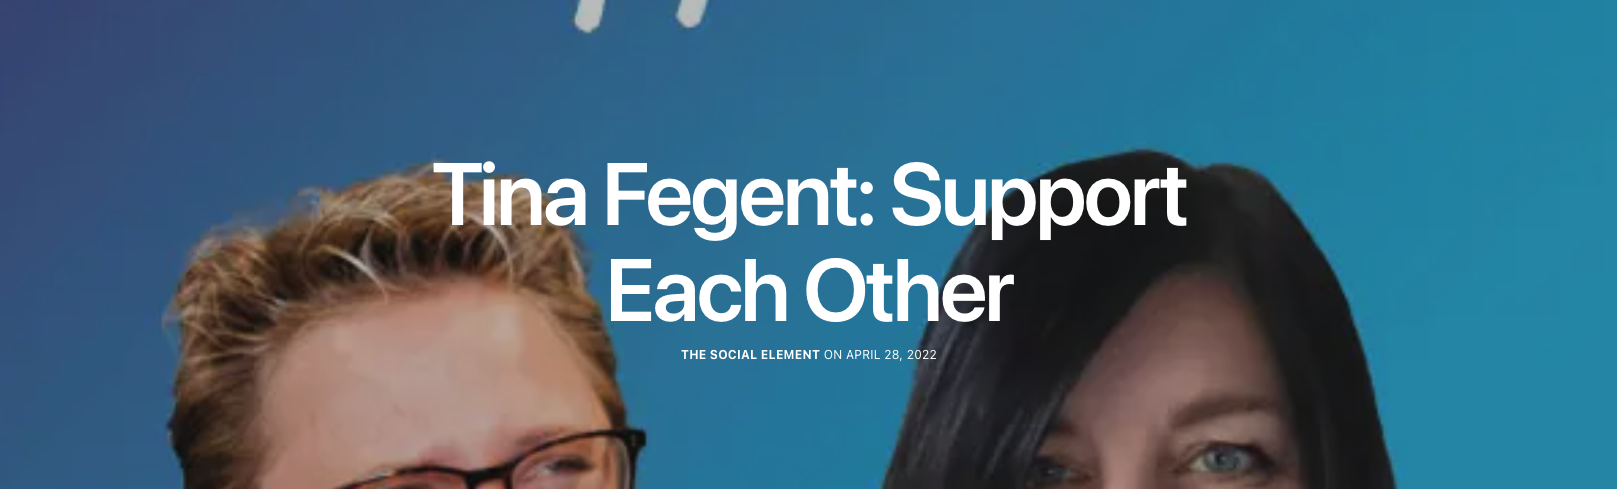 Tina Fegent Support Each Other